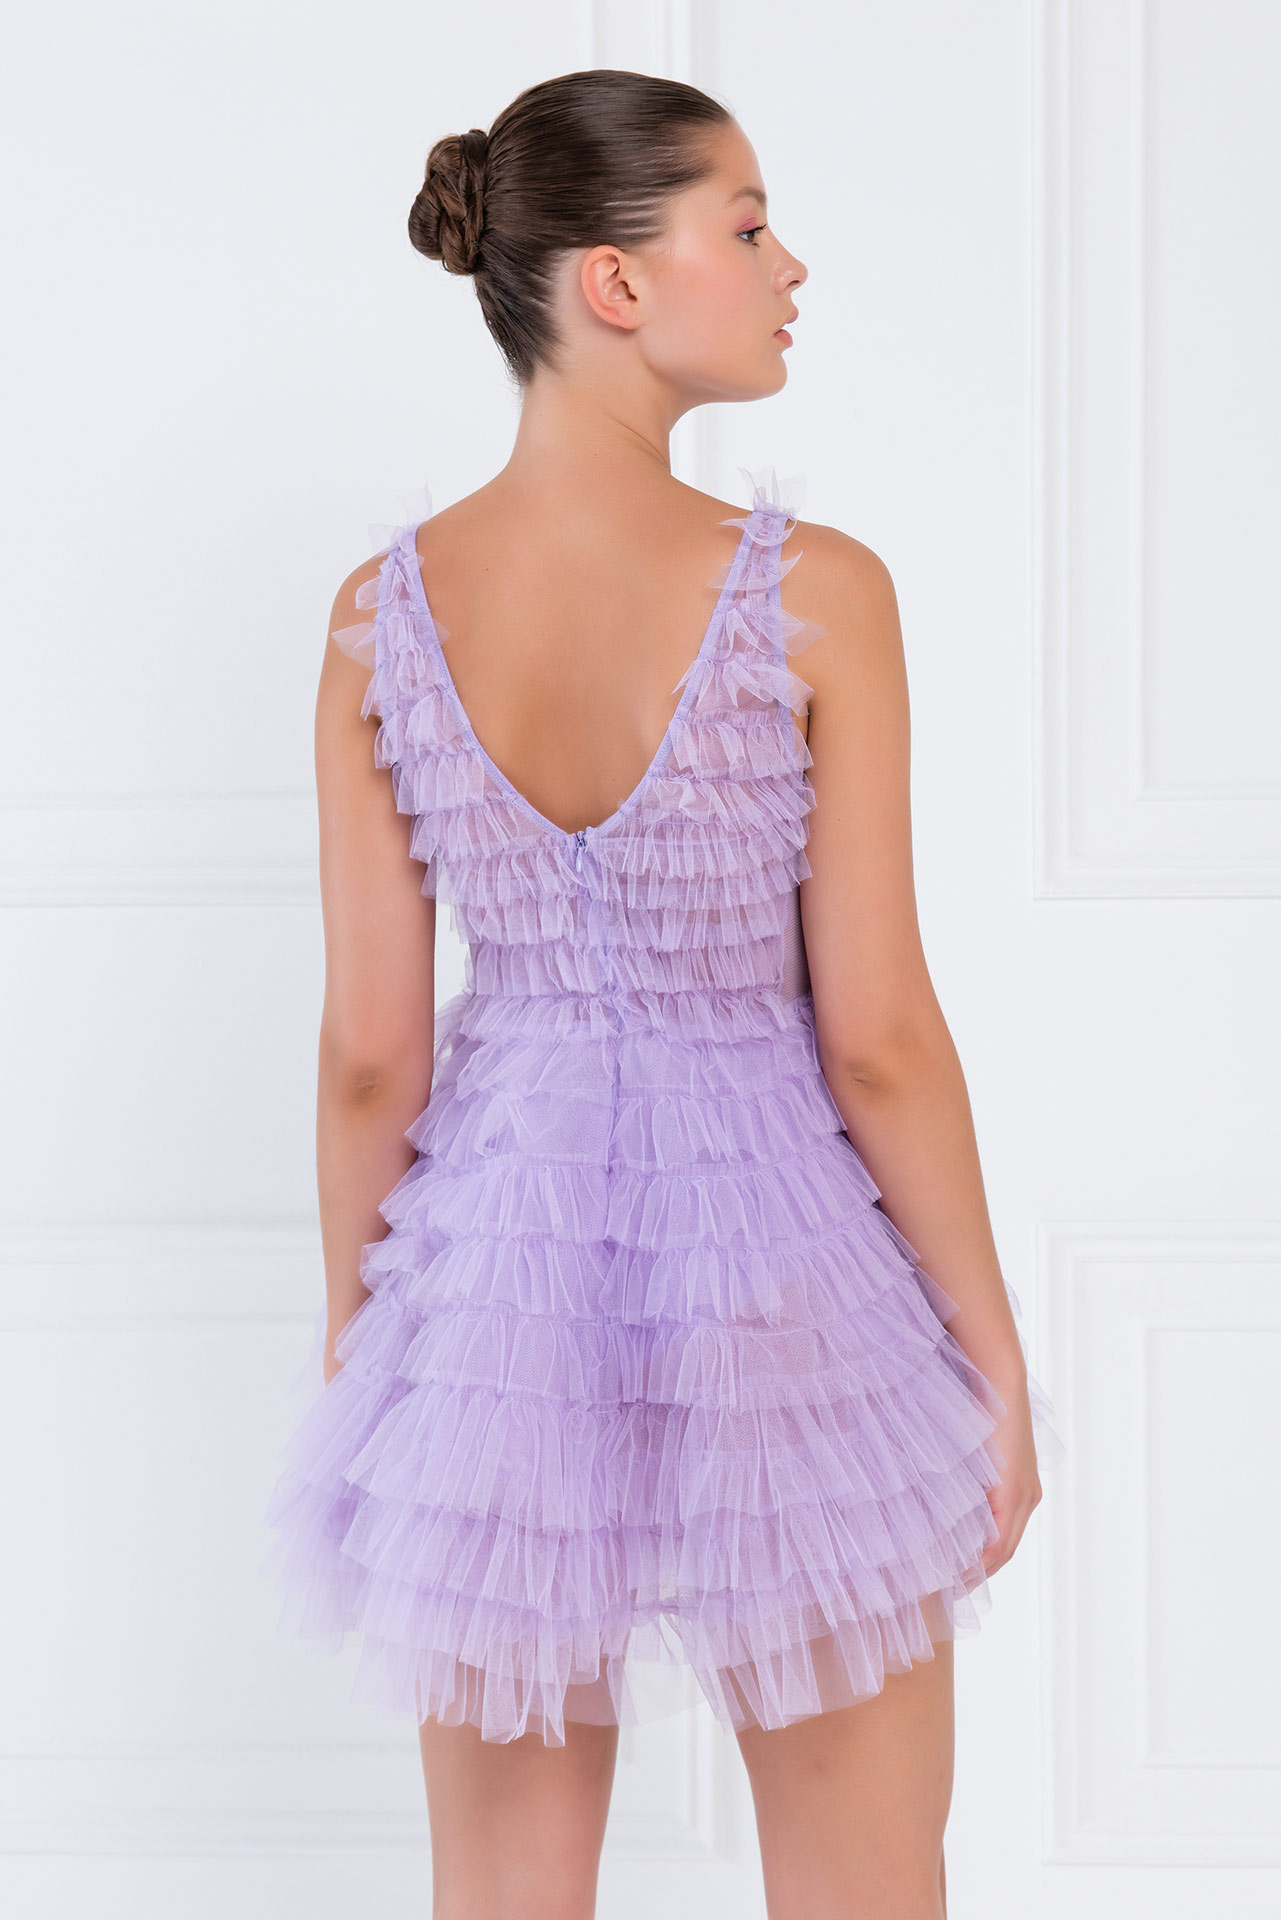 New Lilac Мини-Платье из Фатина с Многоуровневыми Оборками и Глубоким Декольте